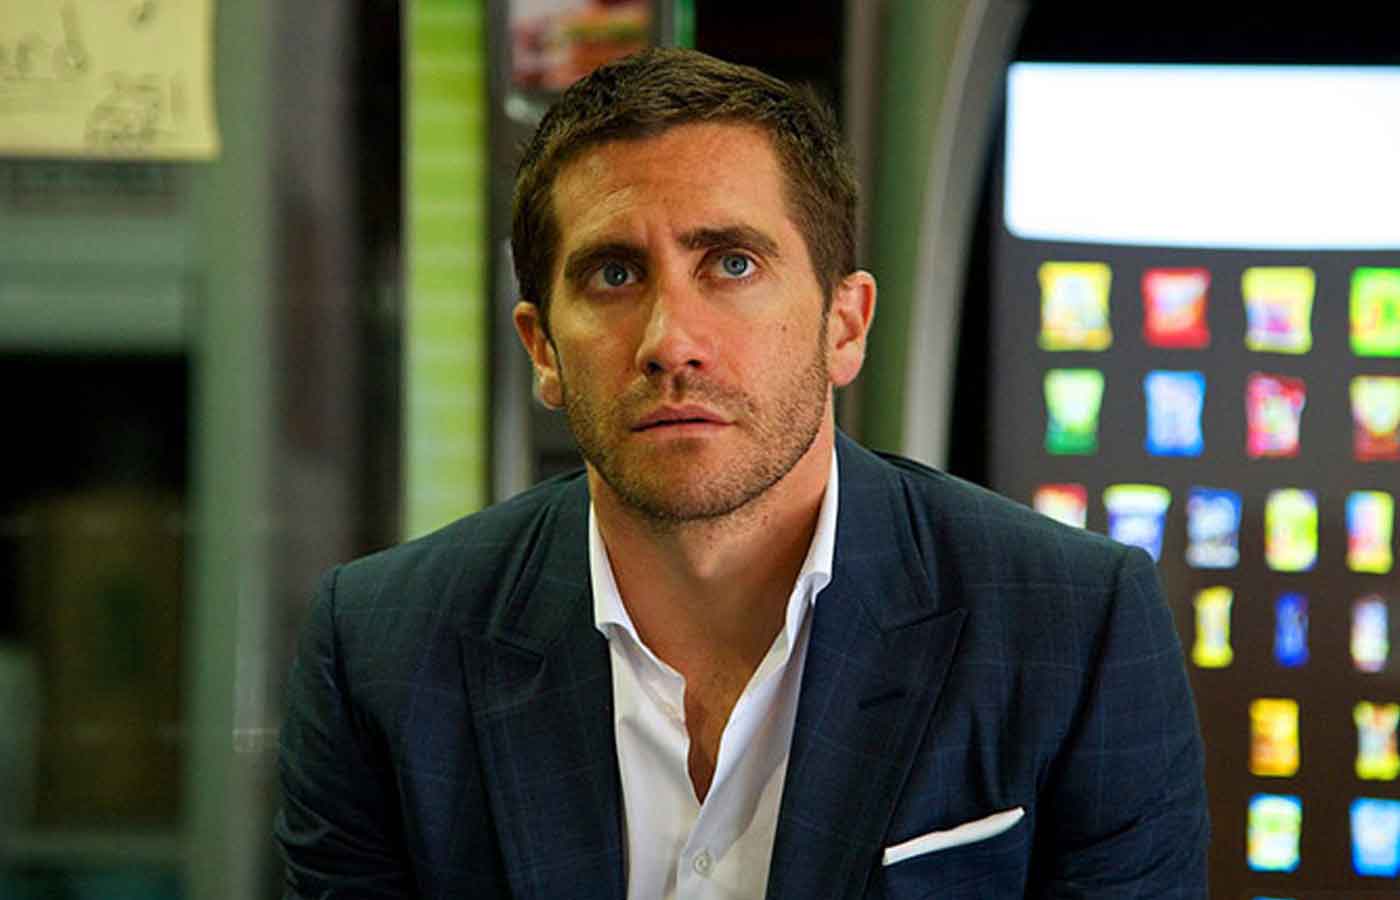 Jake-Gyllenhaal-back-on-regular-baths